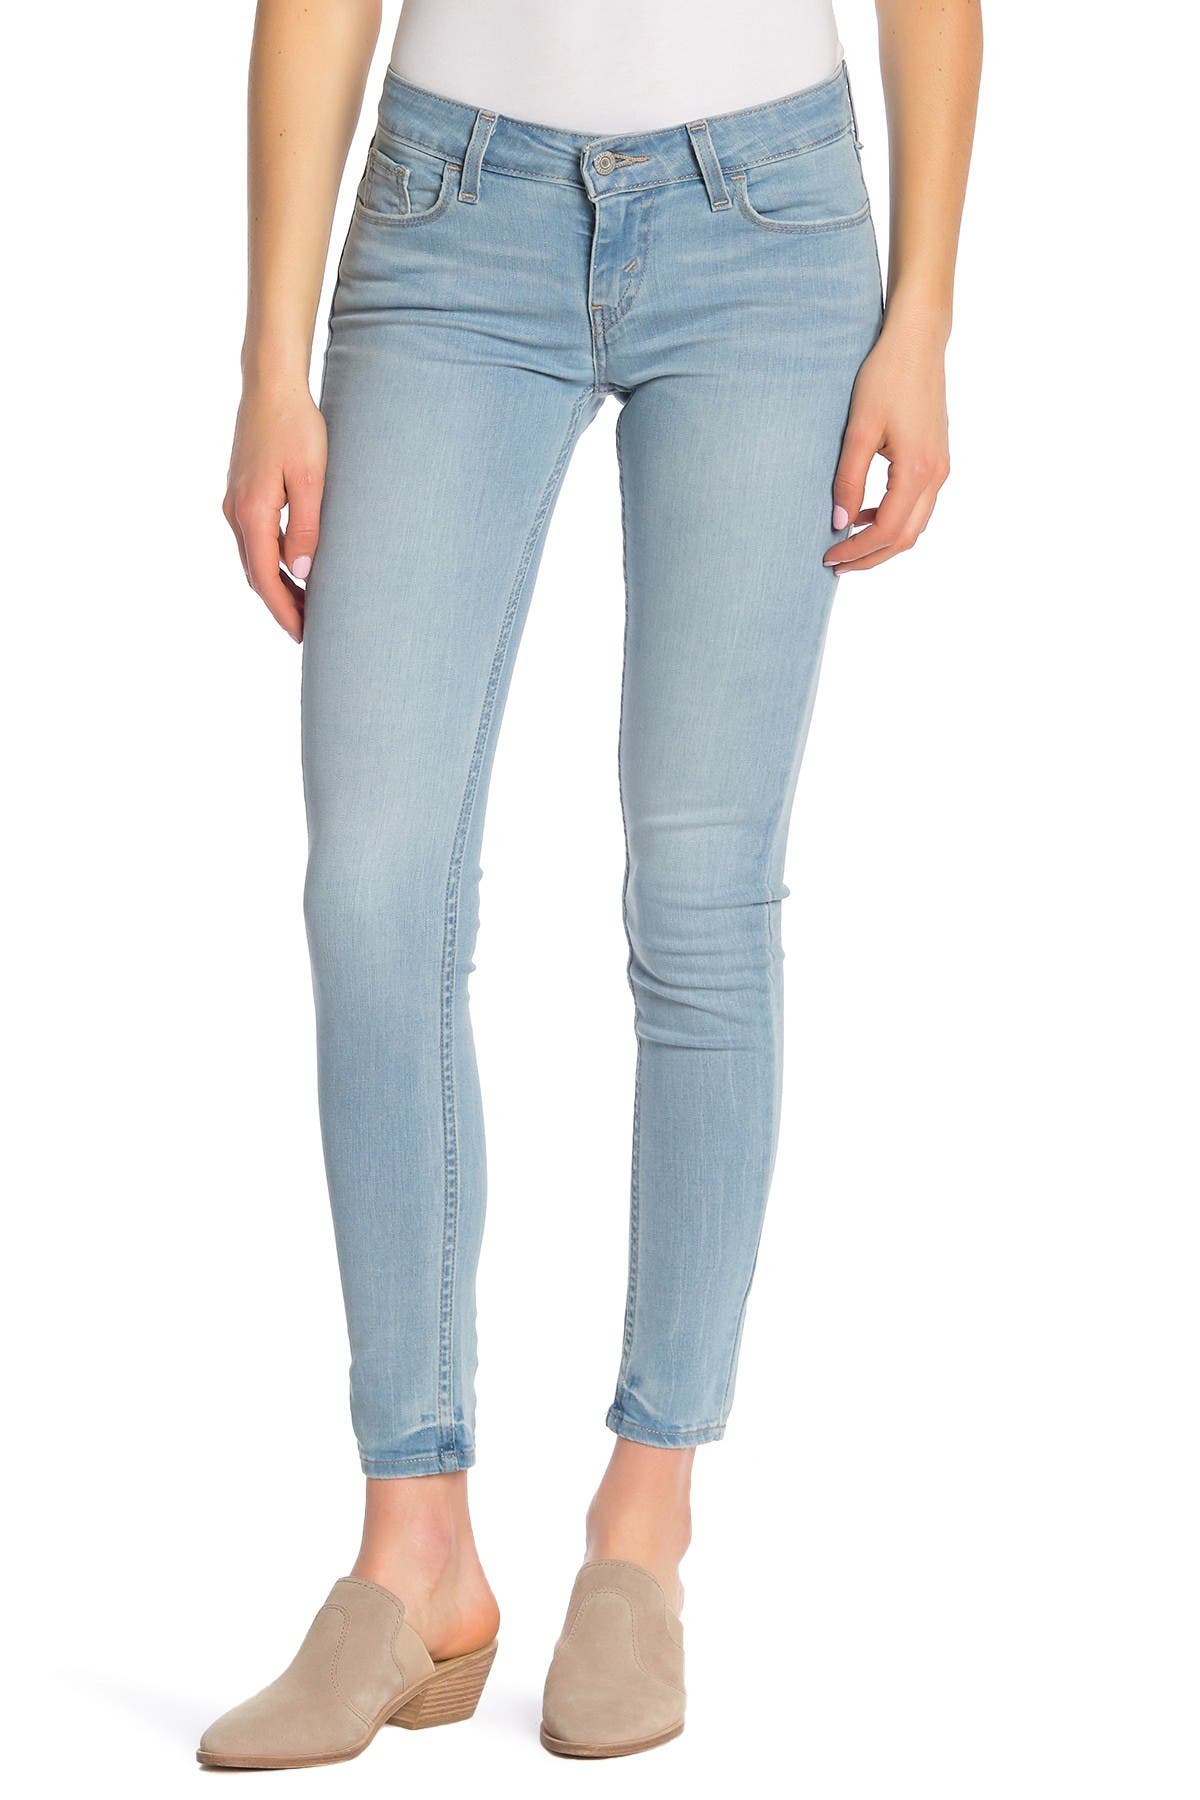 levi's 535 super skinny women's jeans